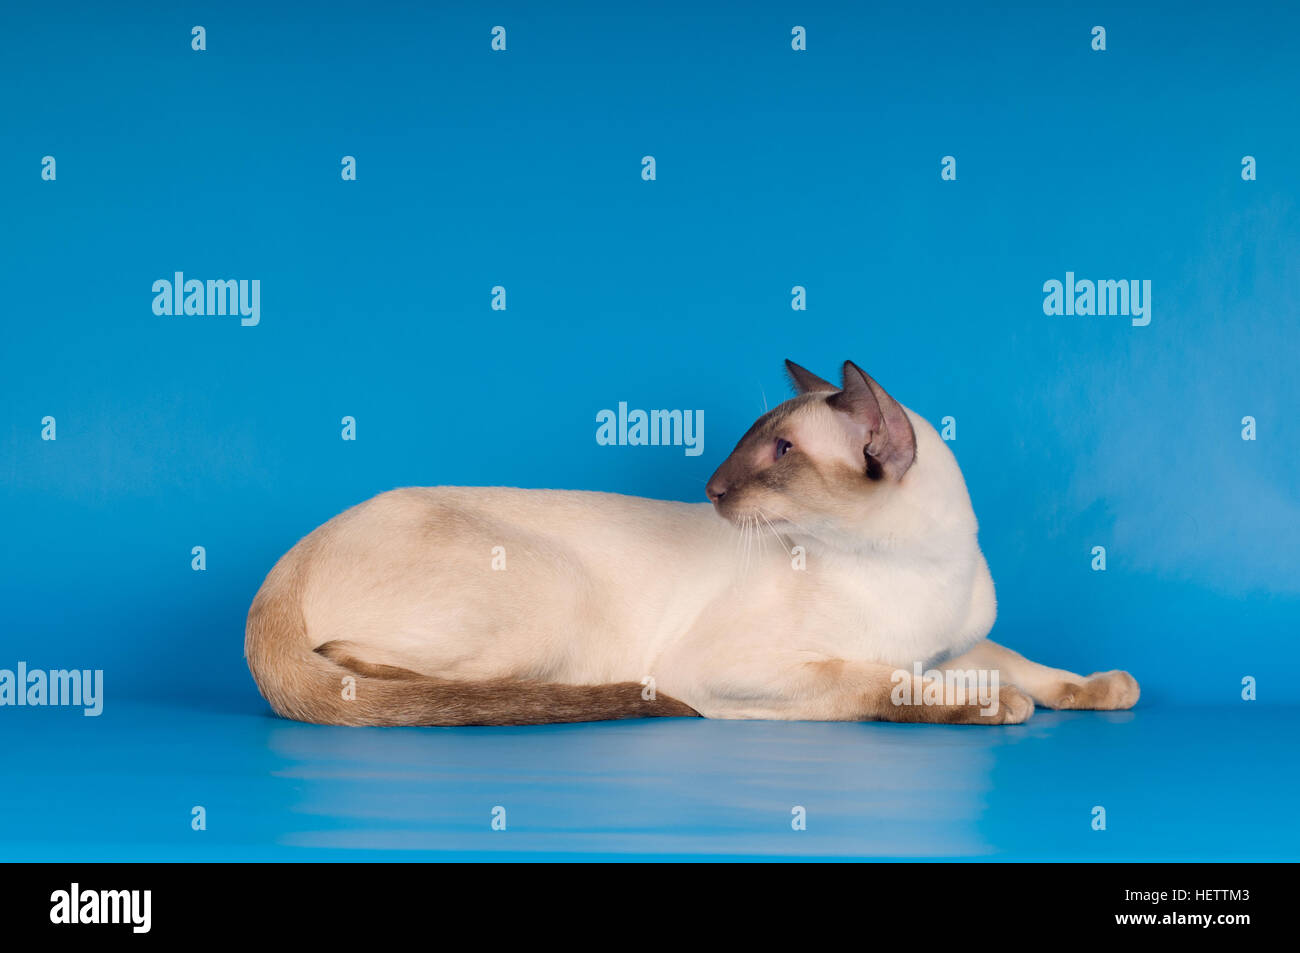 Siam cat on blue Stock Photo